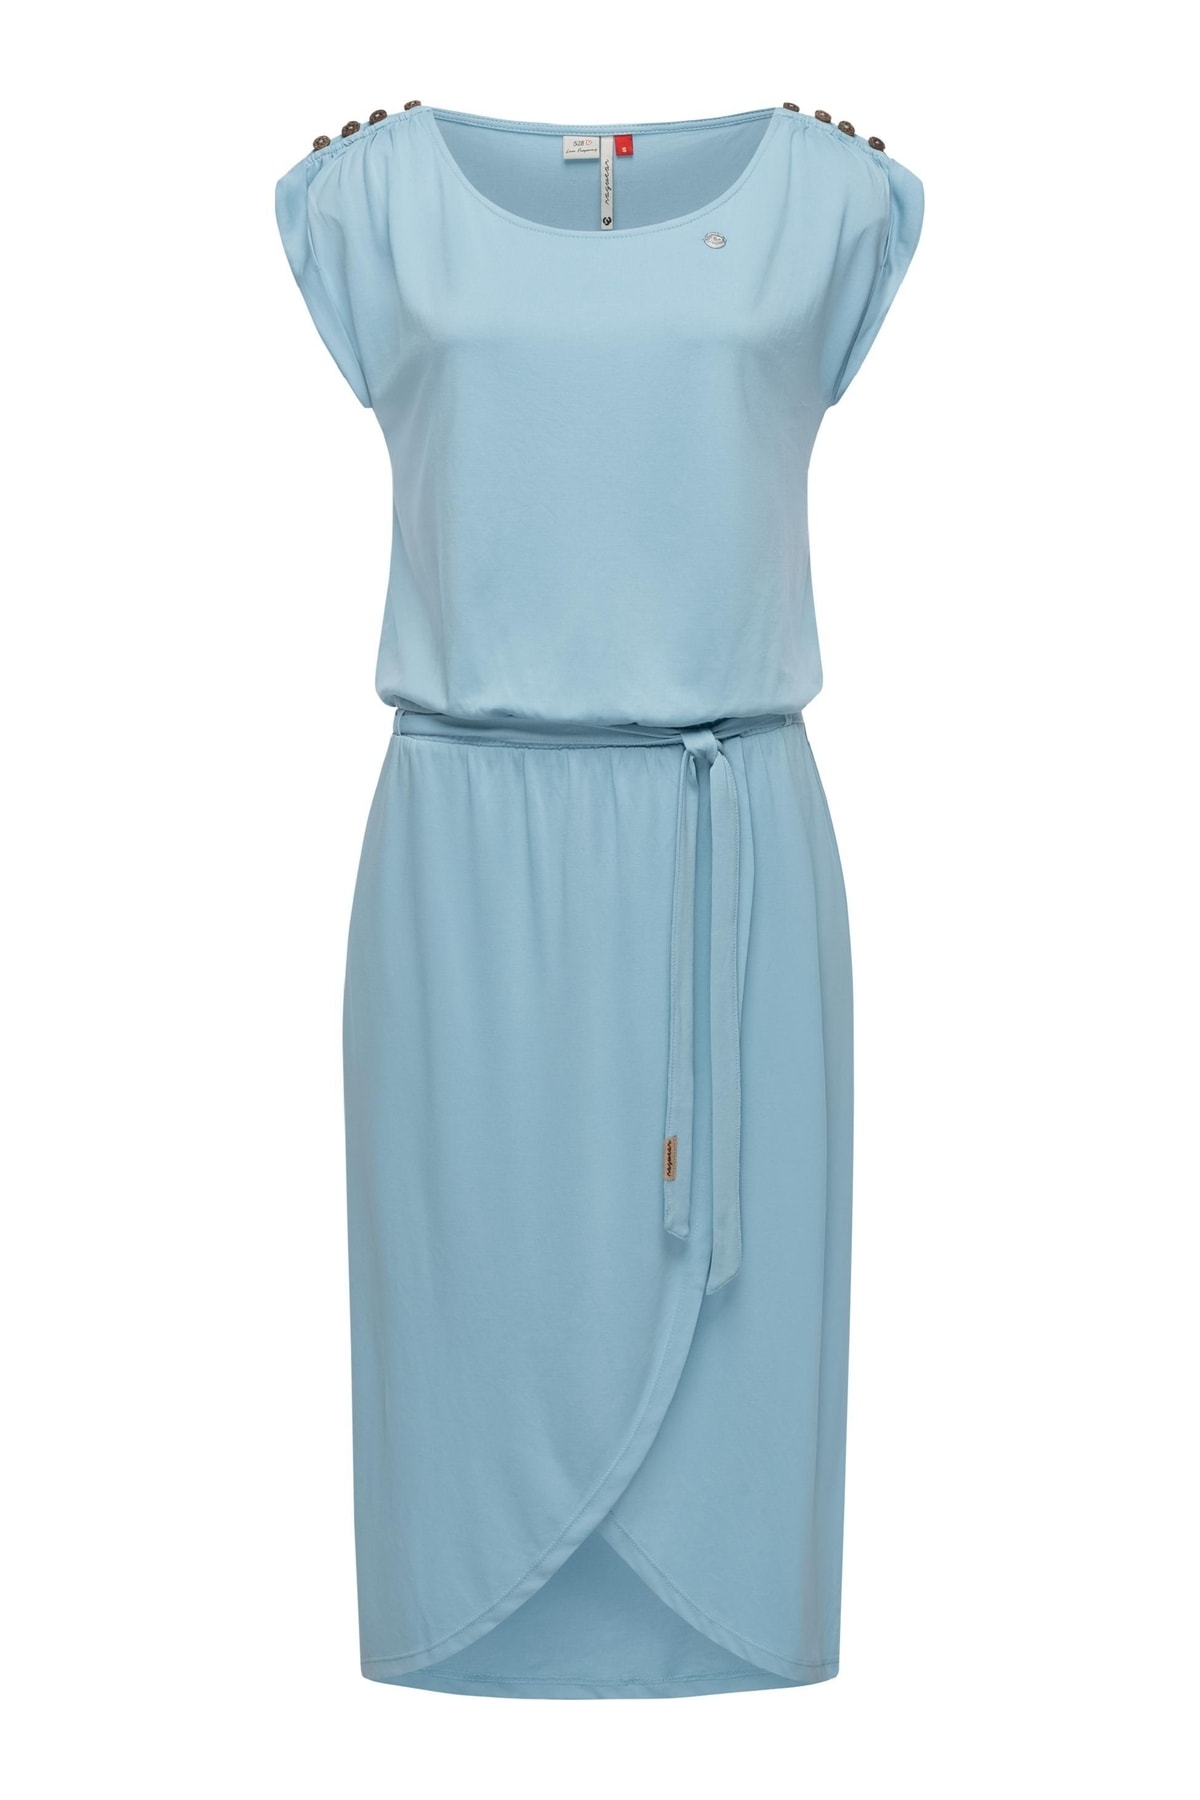 Ragwear Kleid Blau Jerseykleid Fast ausverkauft